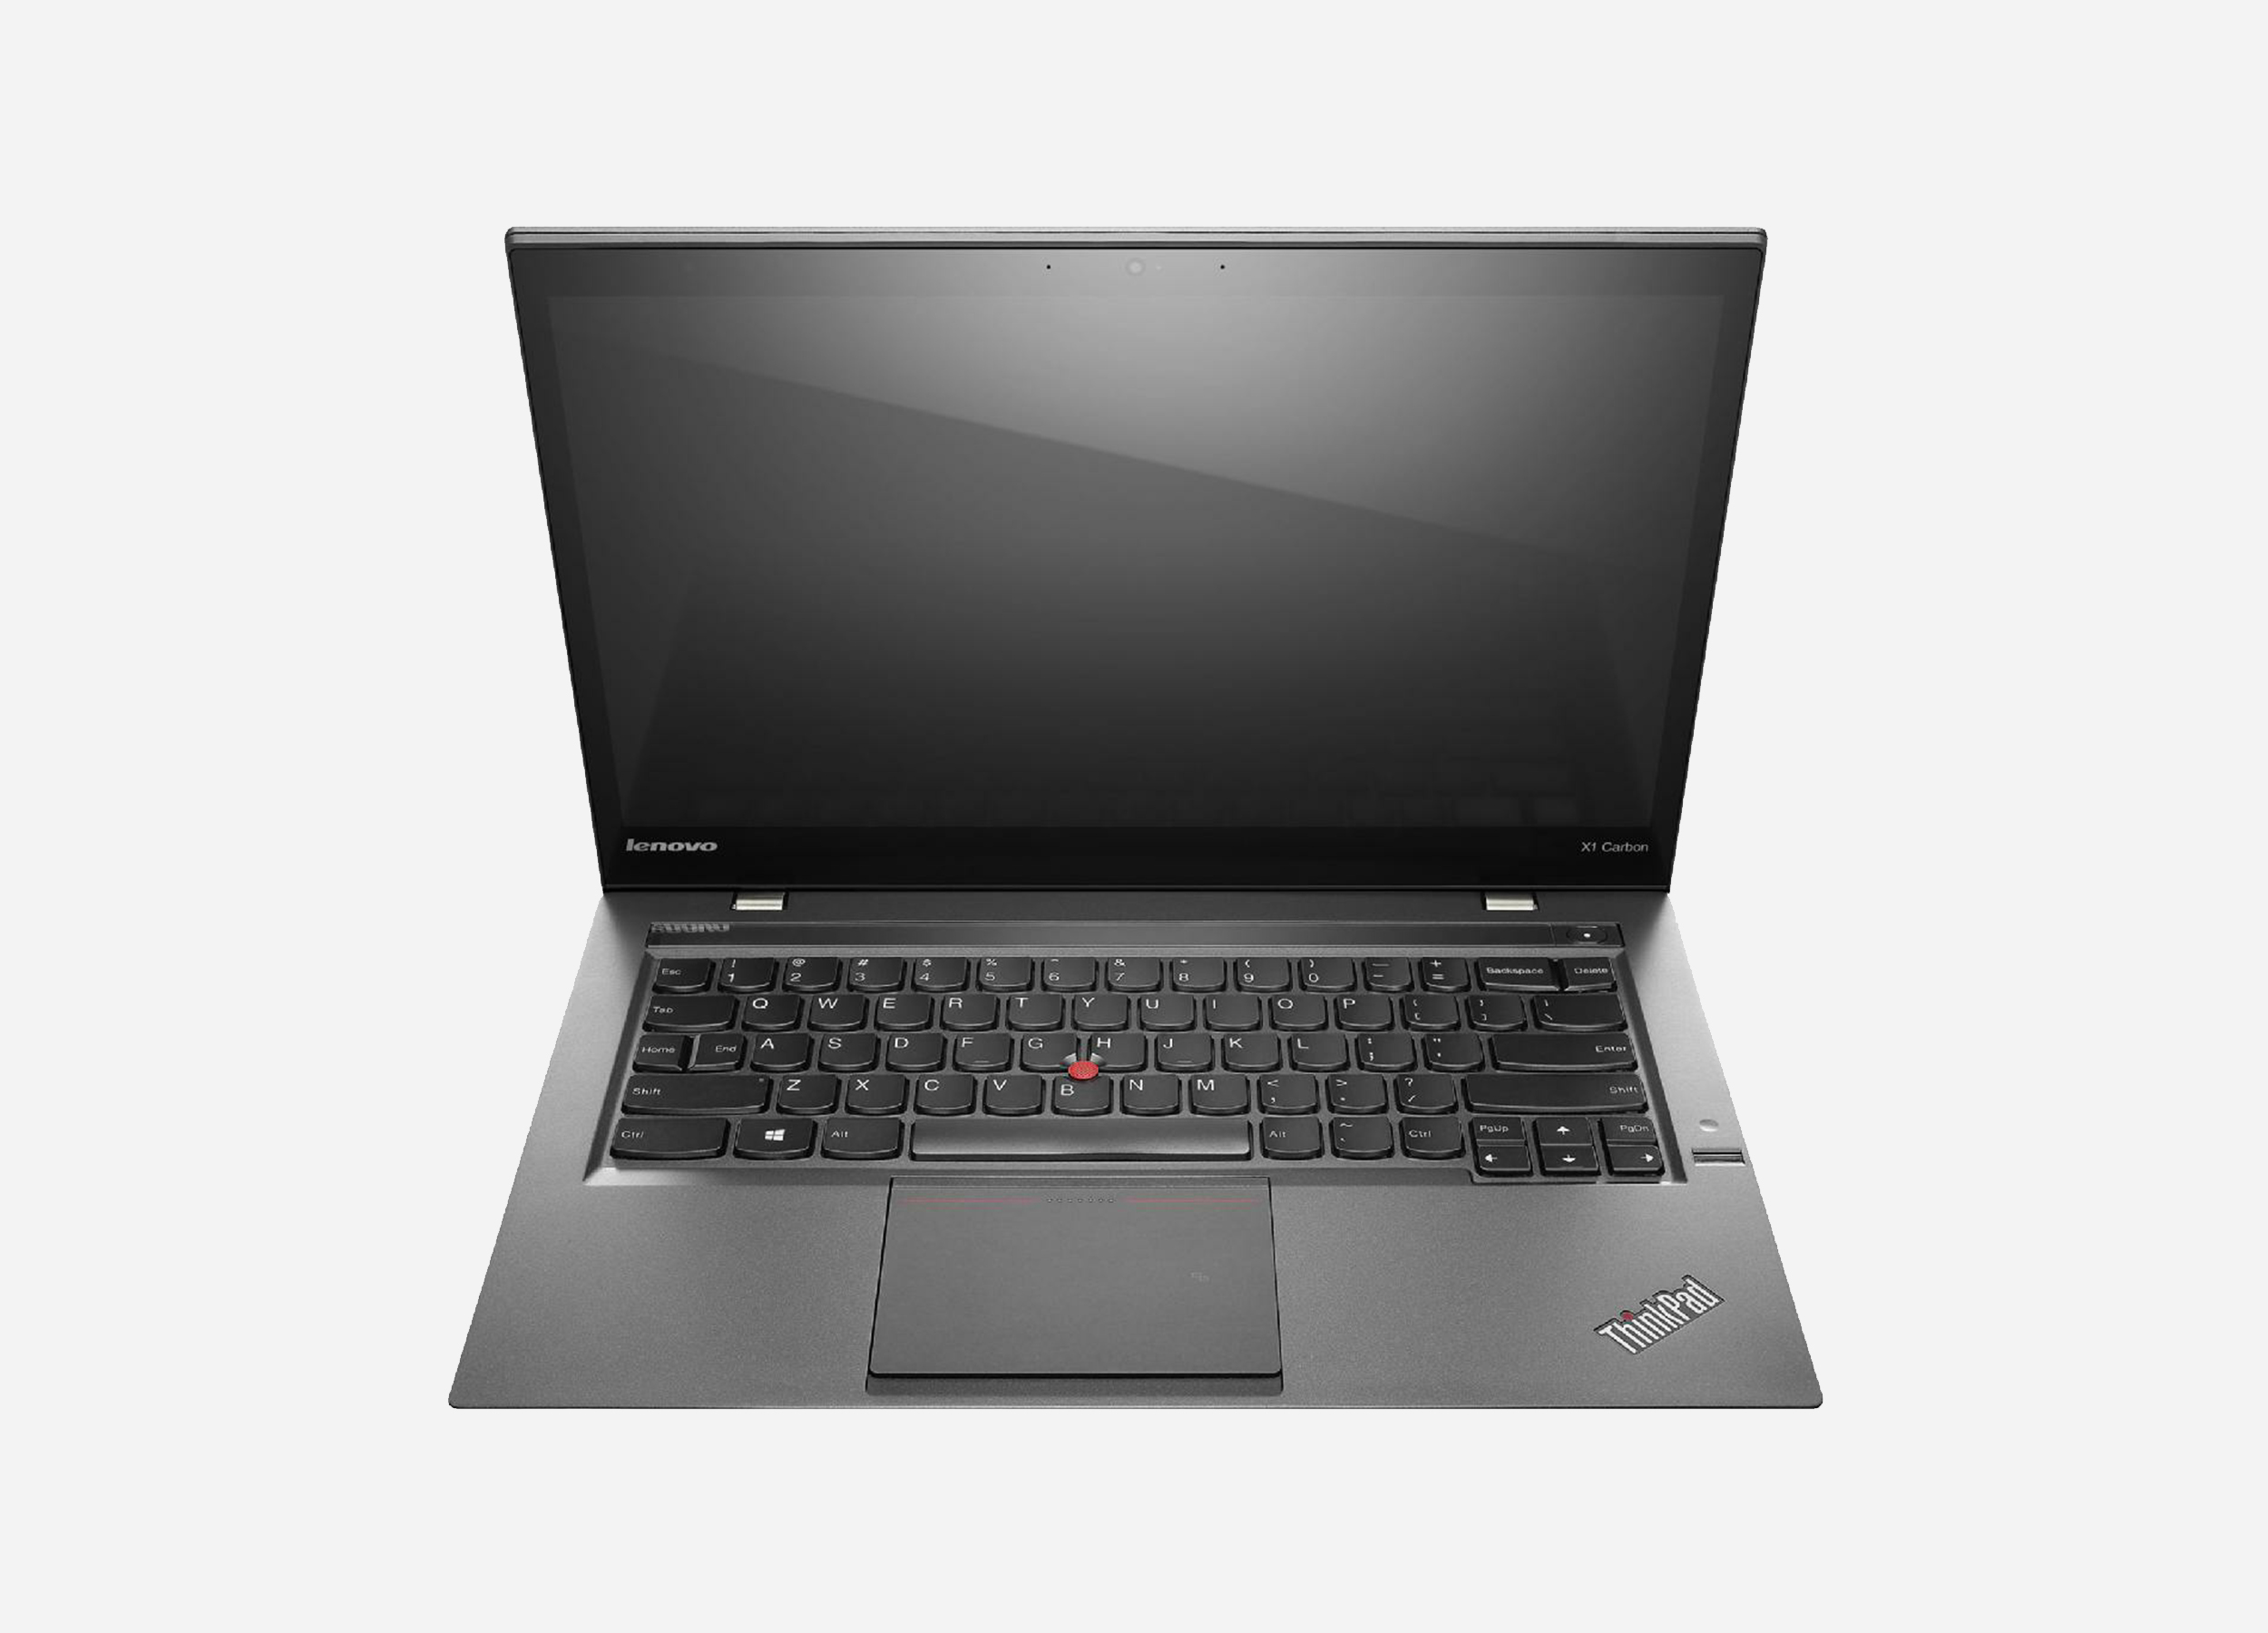 Lenovo ThinkPad X1 Carbon Core i5 3427U